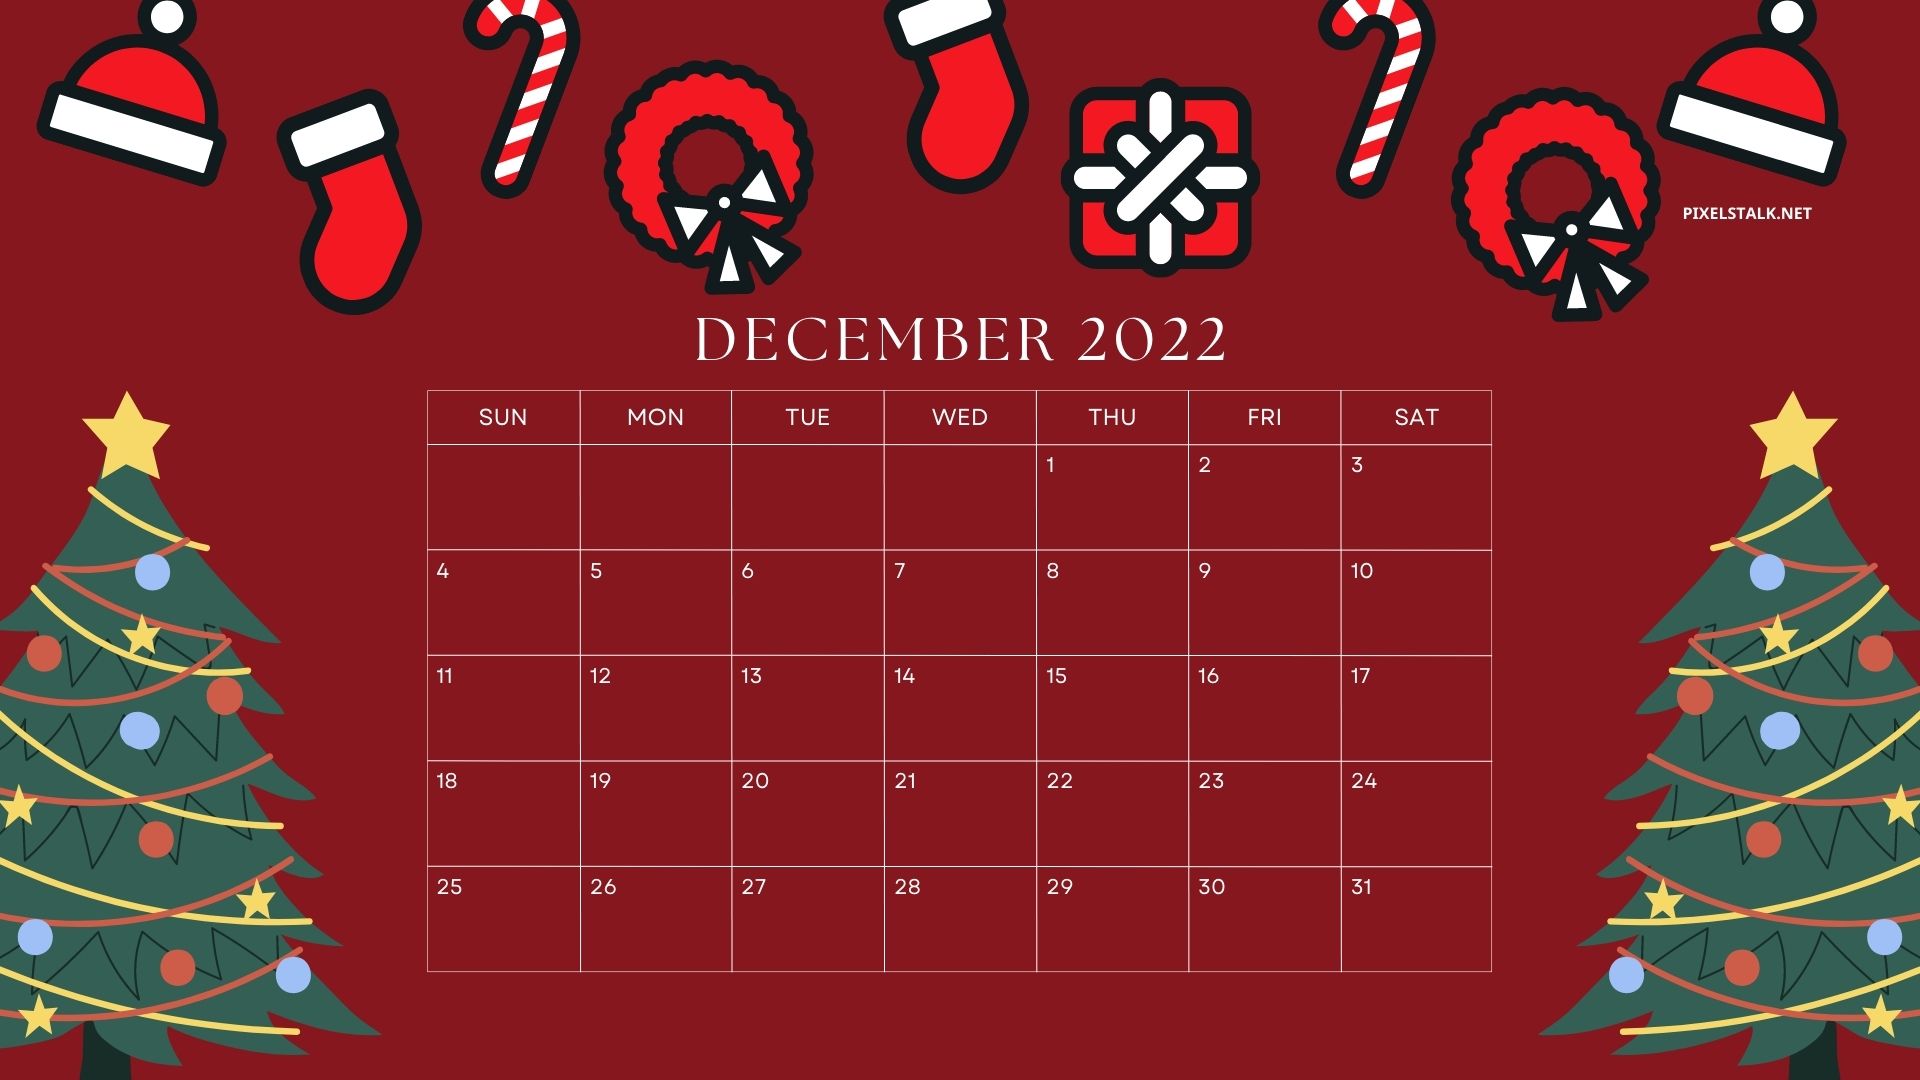 Free download December 2022 Calendar Backgrounds HD 1920x1080 for your  Desktop Mobile  Tablet  Explore 47 December 2022 Calendar Wallpapers   December 2020 Calendar Wallpapers 2022 Calendar Wallpapers December 2021  Calendar Wallpapers